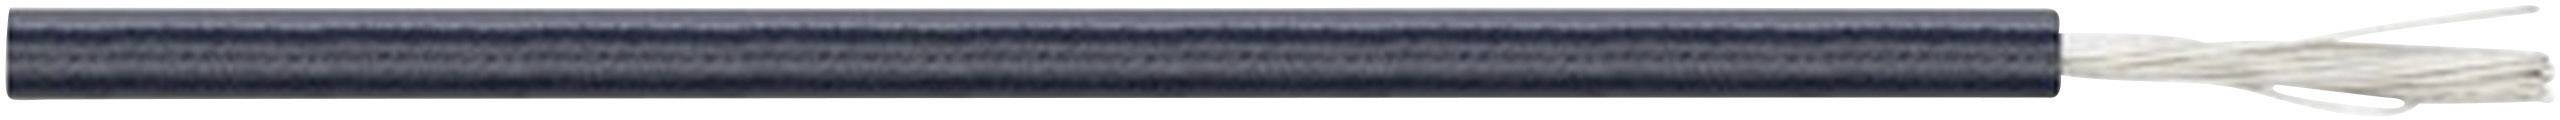 LAPP KABEL Litze Multi-Standard SC 1 1 x 0.50 mm² Dunkelblau LappKabel 4180414K 3000 m